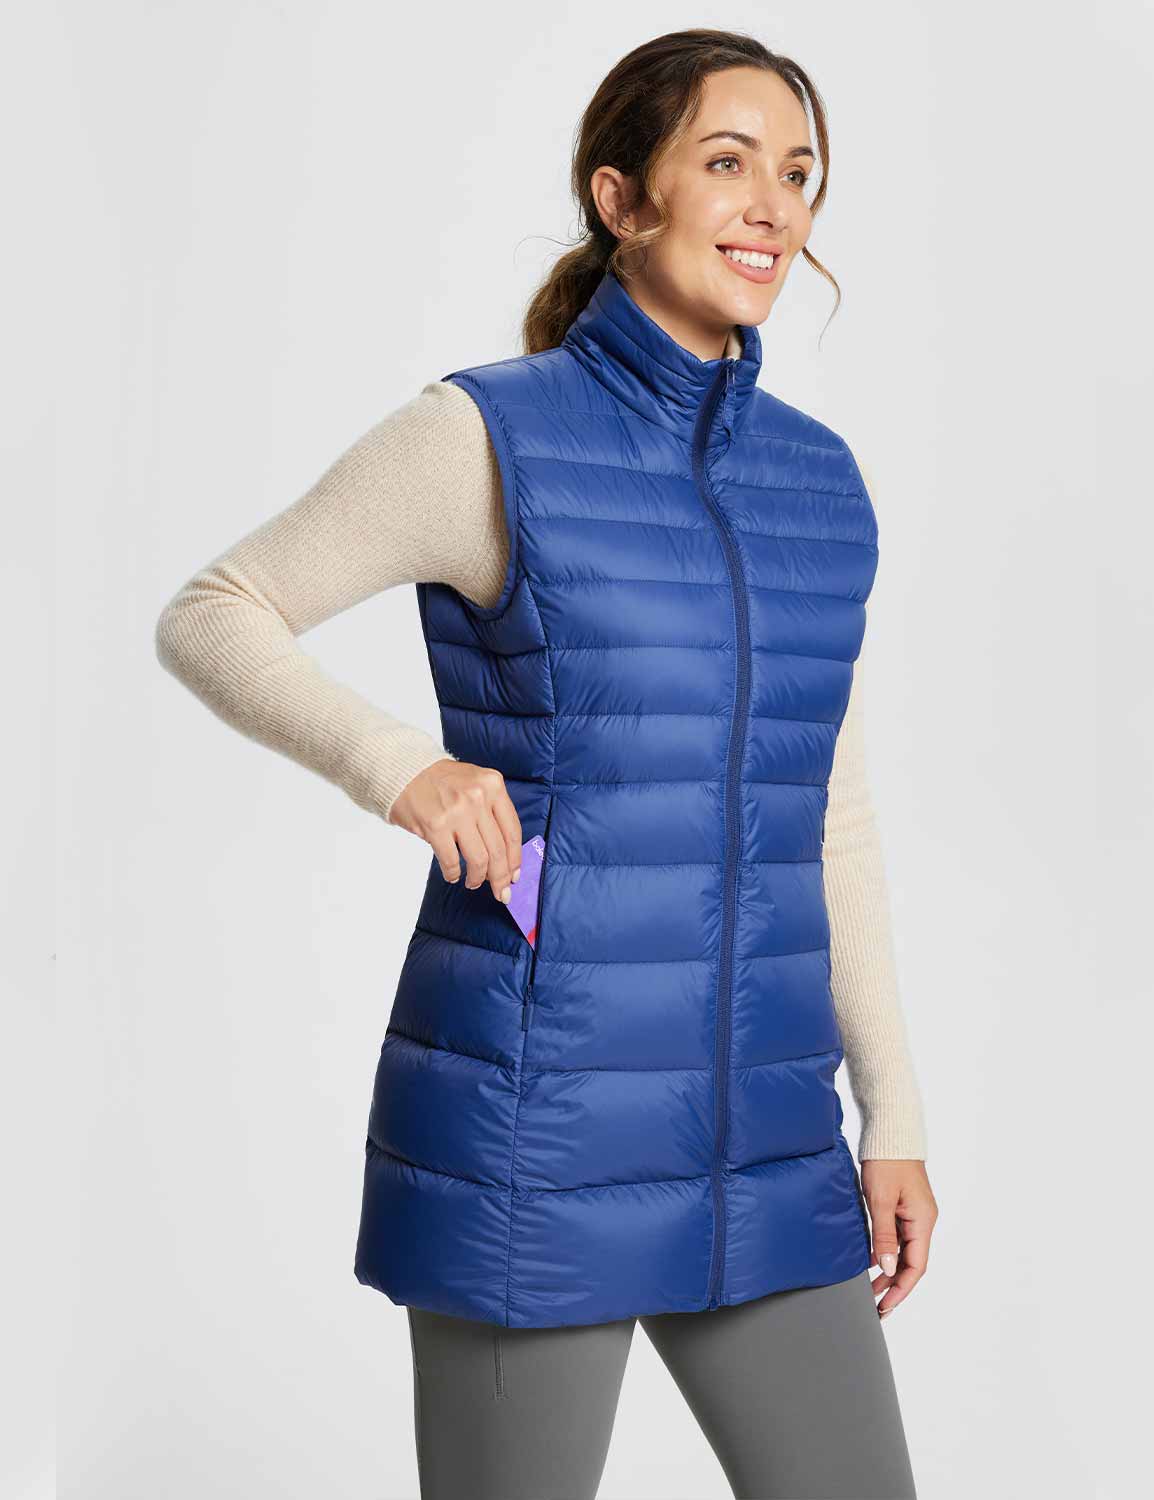 Baleaf Women's Water-Resistant Puffer Sleeveless Jacket dga070 Navy Blue Side